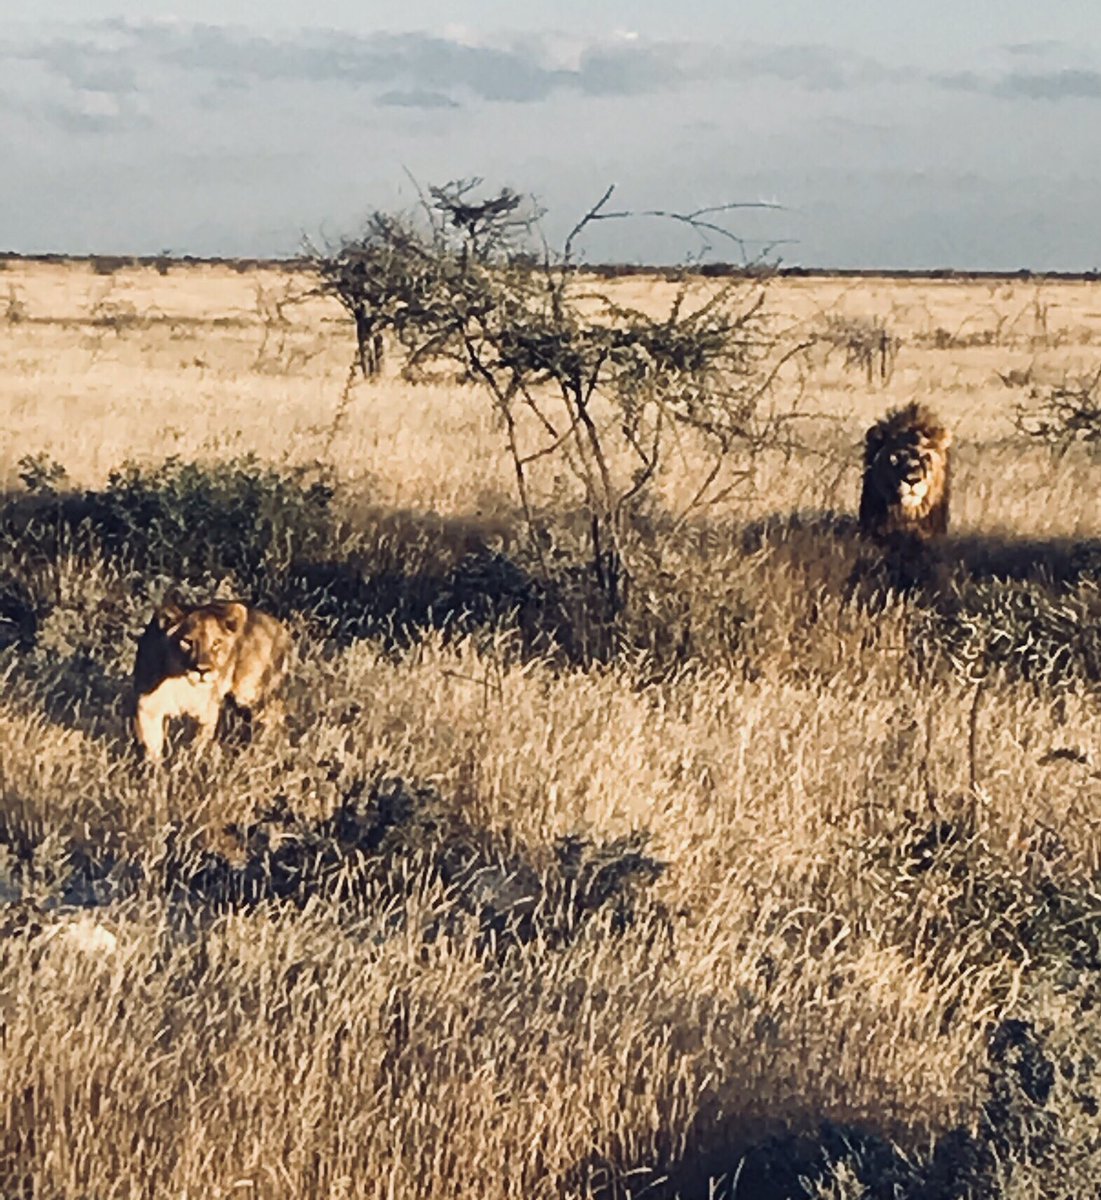 Just some strays I stumbled upon this week... #Namibia #safari #amazing #majestic #huntingfordinner #solotravel #holibobs